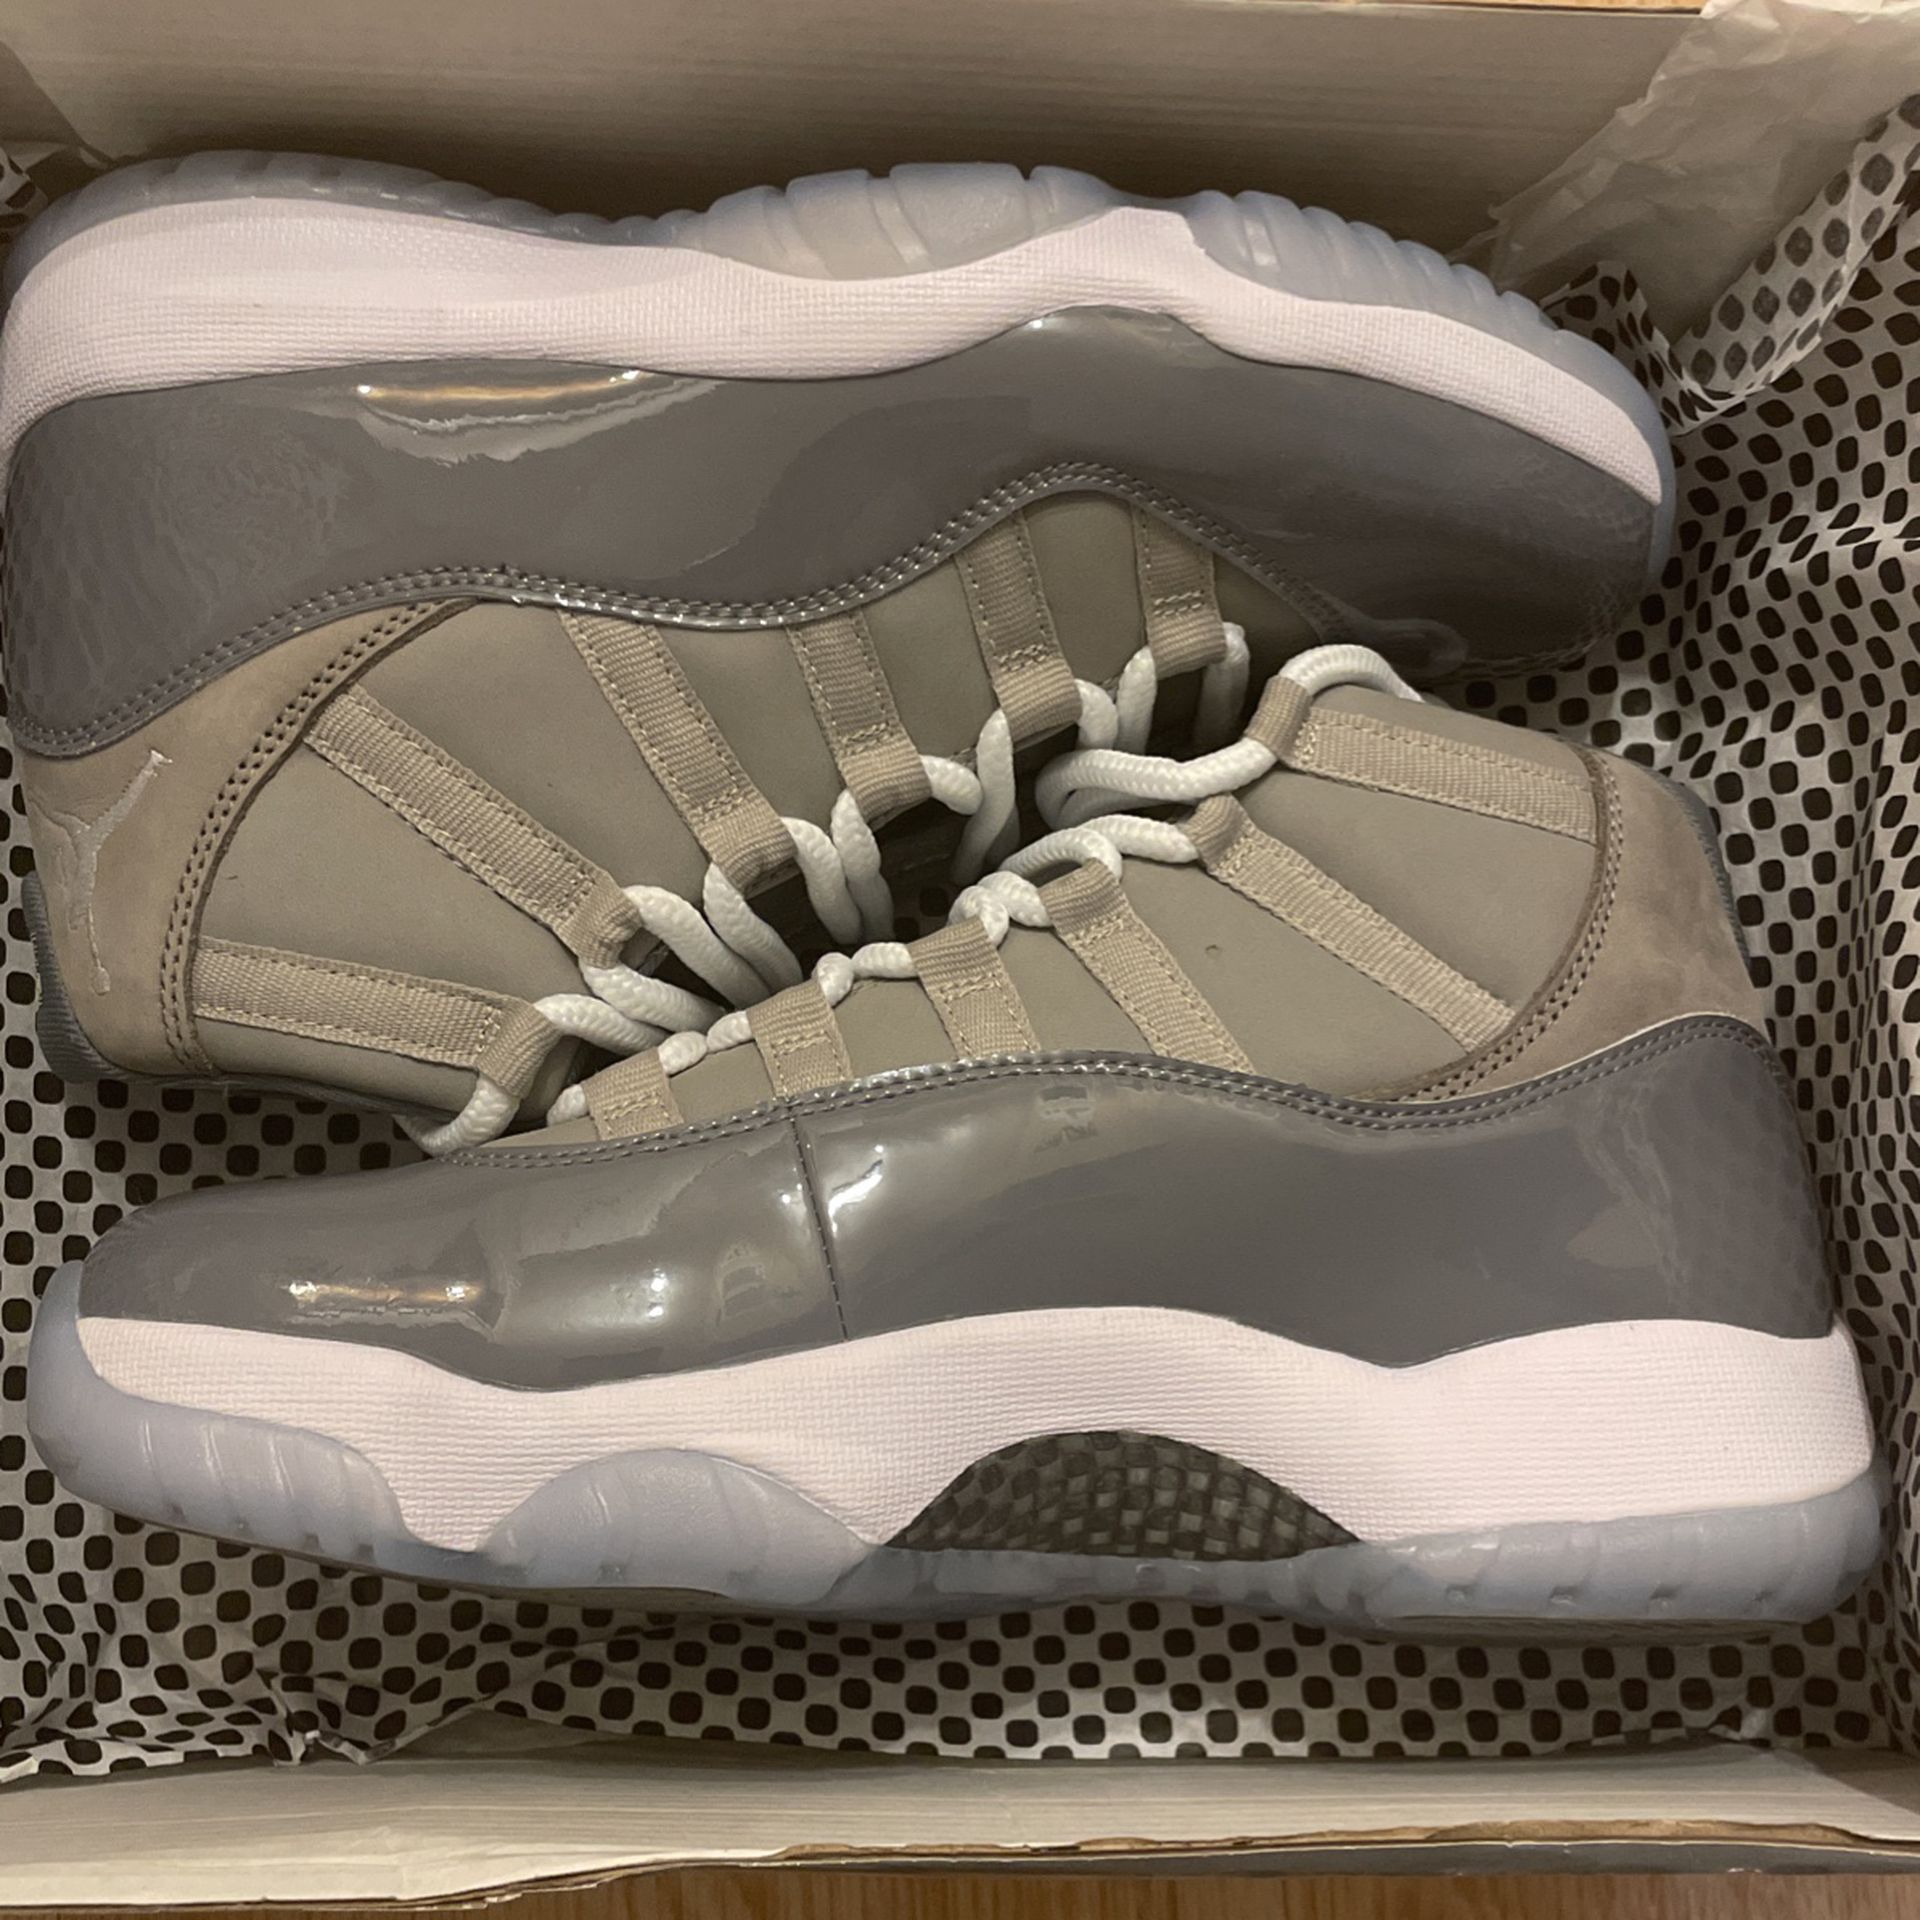 Jordan 11 Cool Grey (Size 7 Men’s)